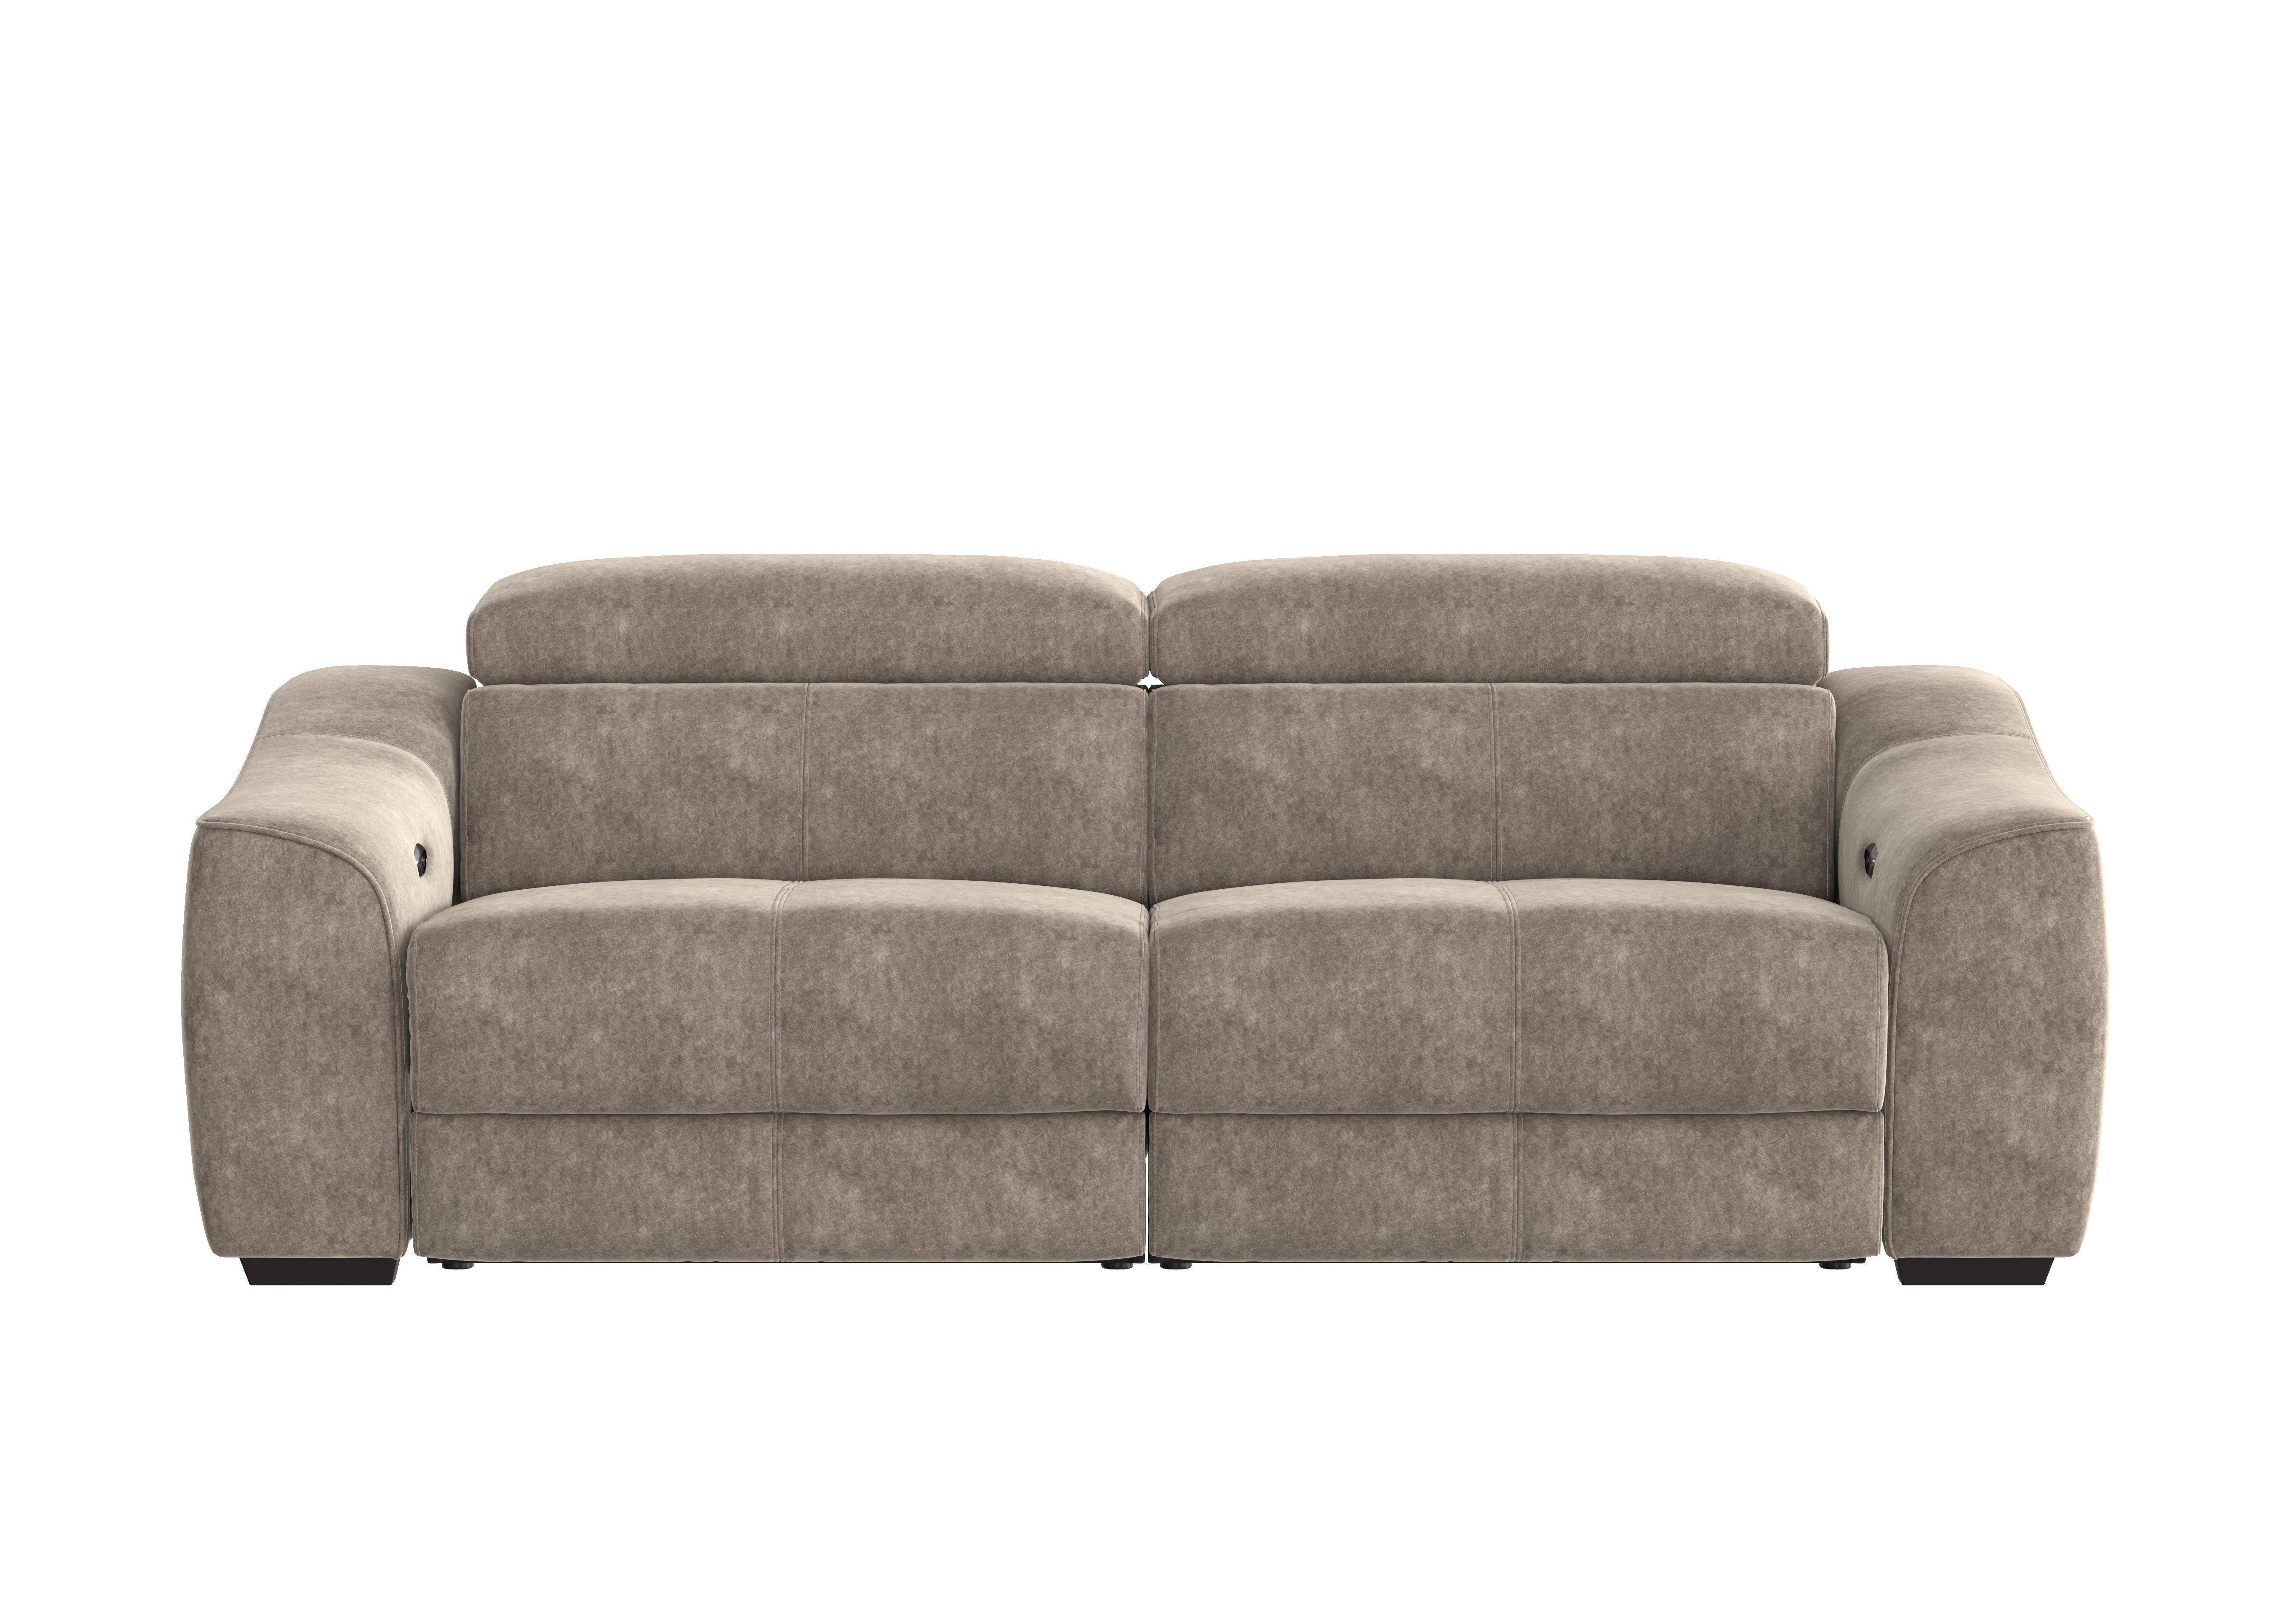 Elixir 3 Seater Fabric Sofa in Bfa-Bnn-R29 Fv1 Mink on Furniture Village